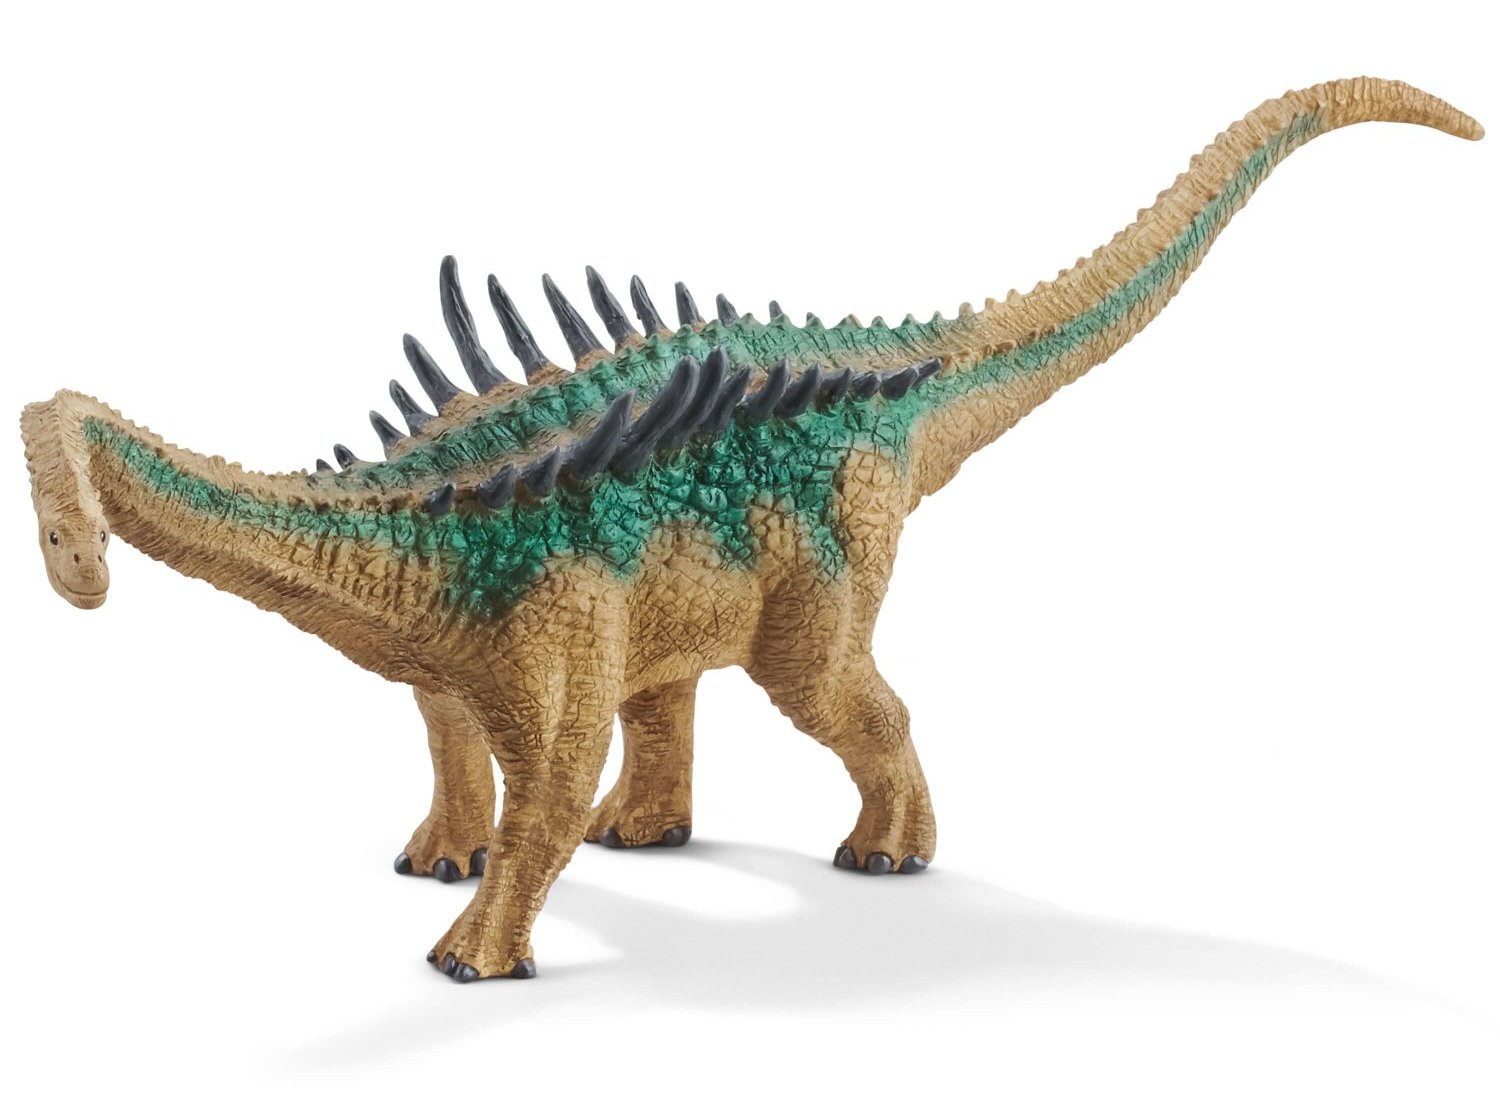 Dinozaur Schleich 15021, Agustinia